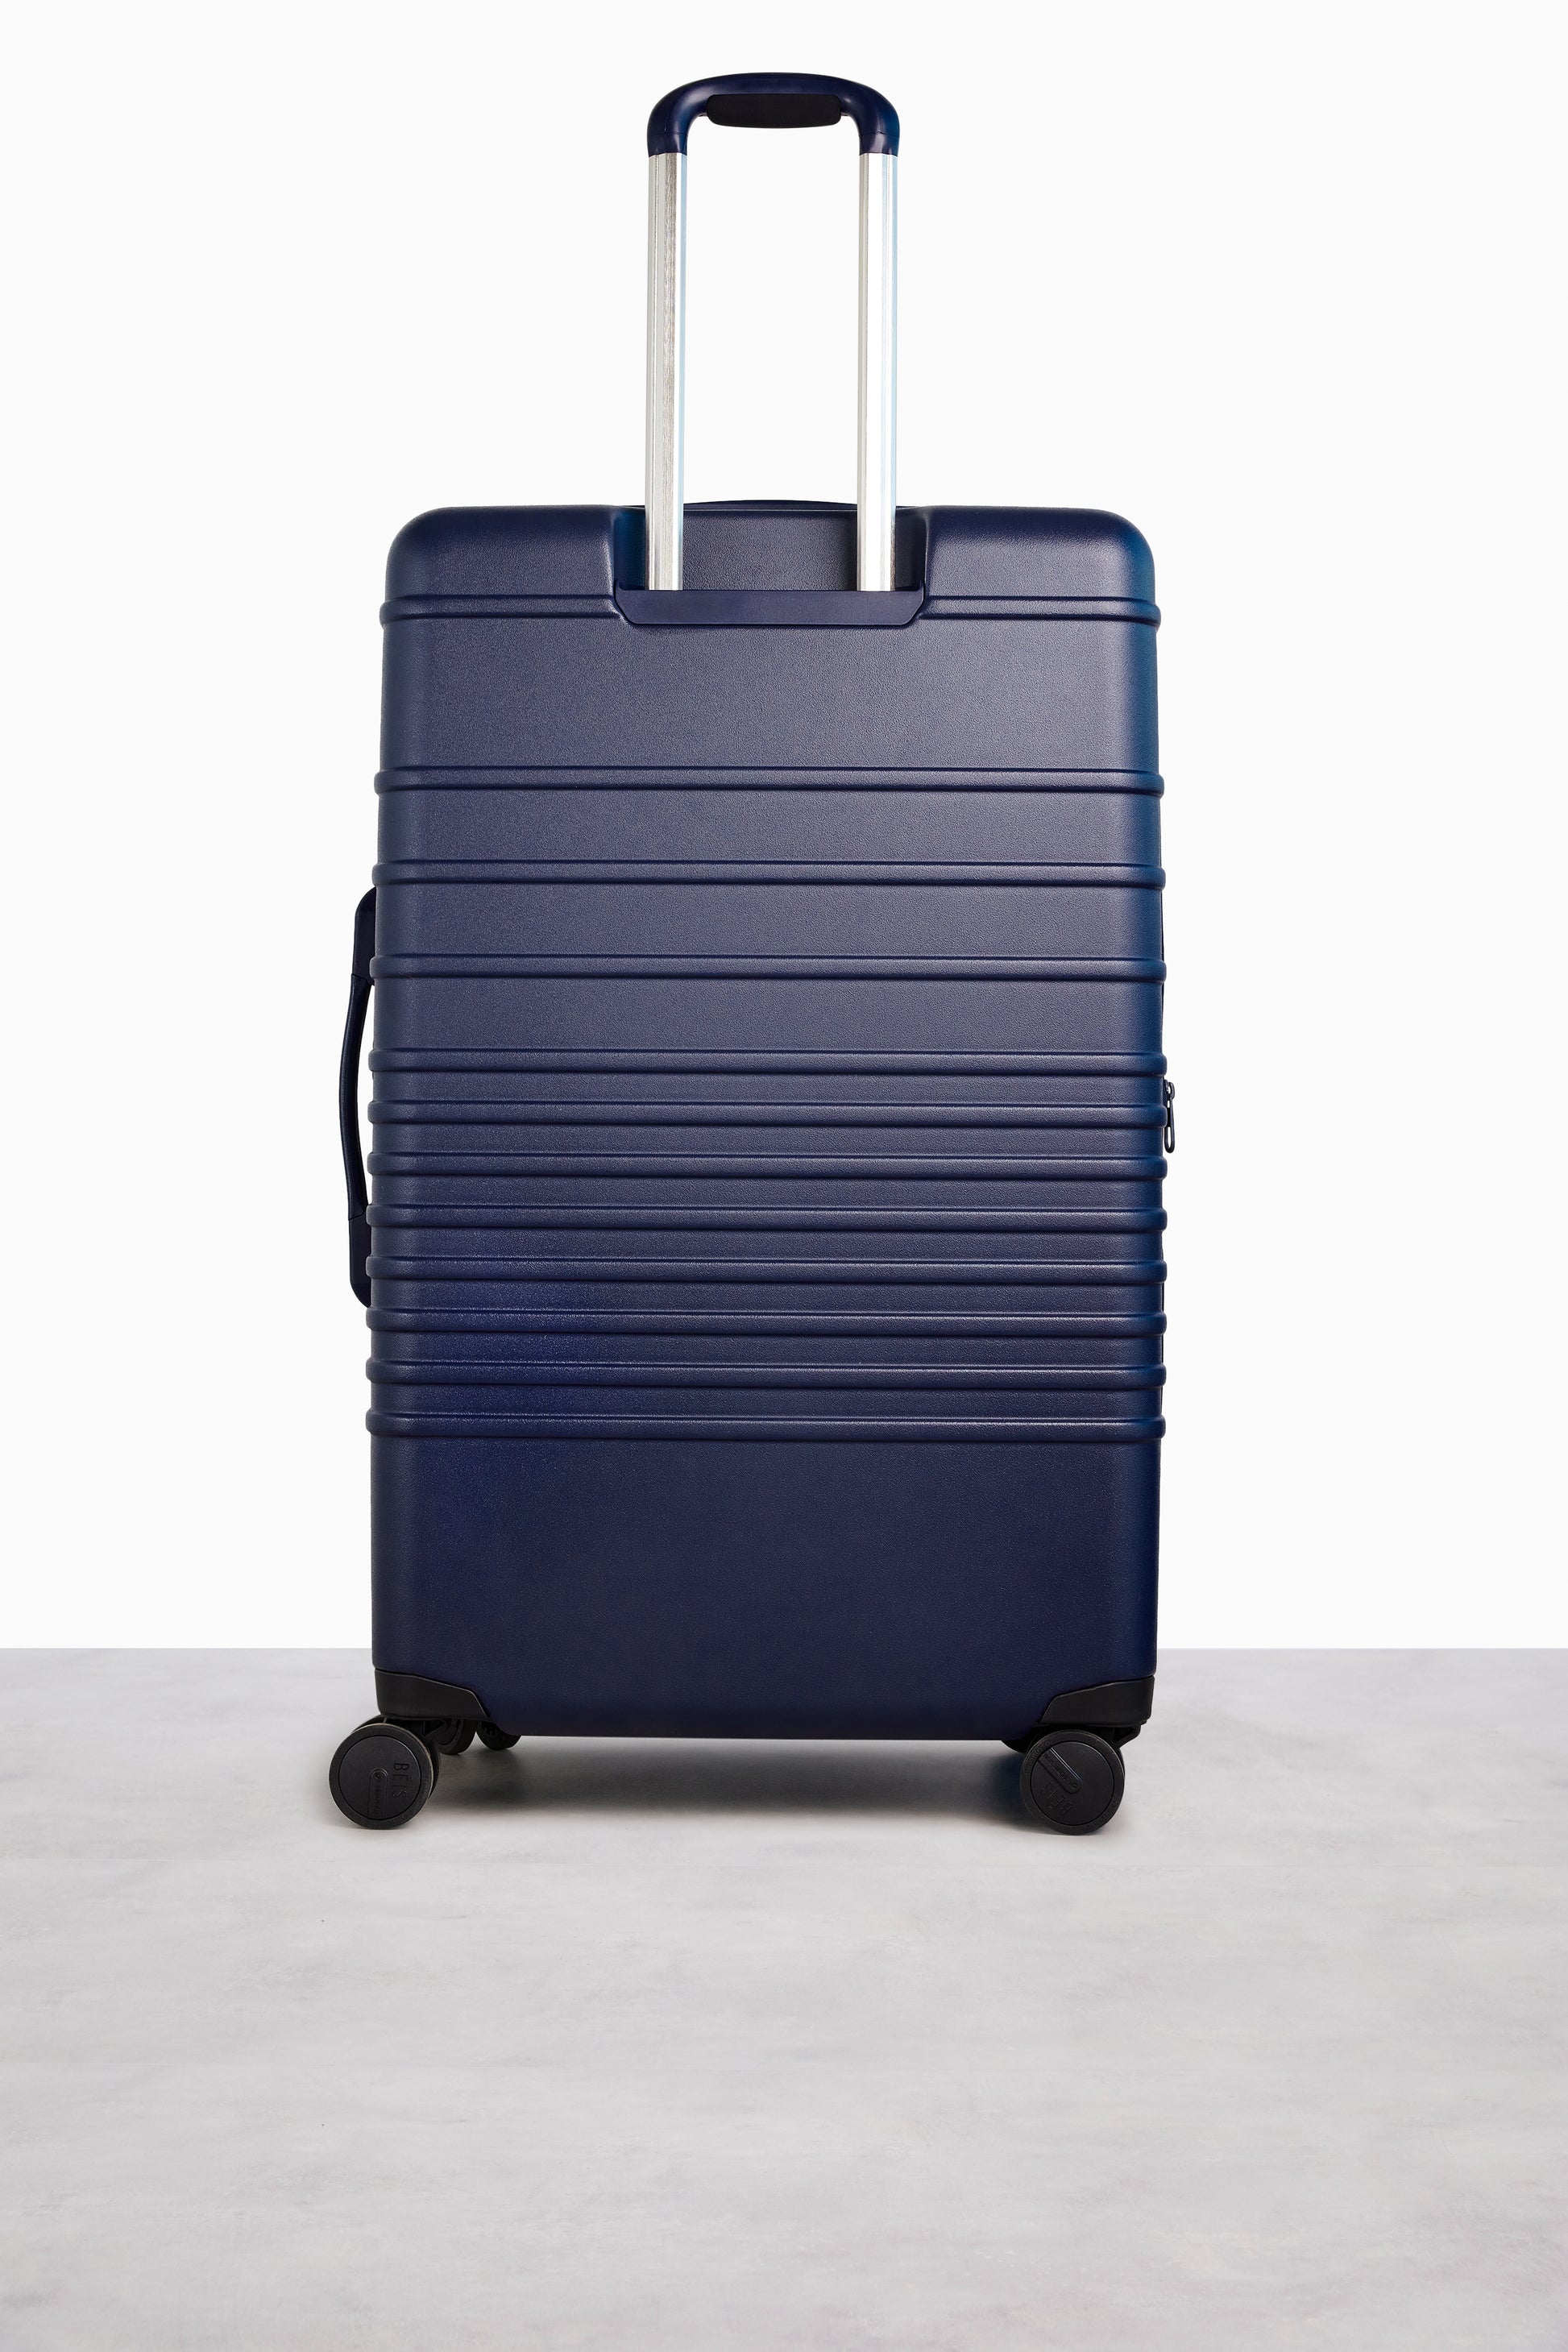 Rolling Luggage (Blue)